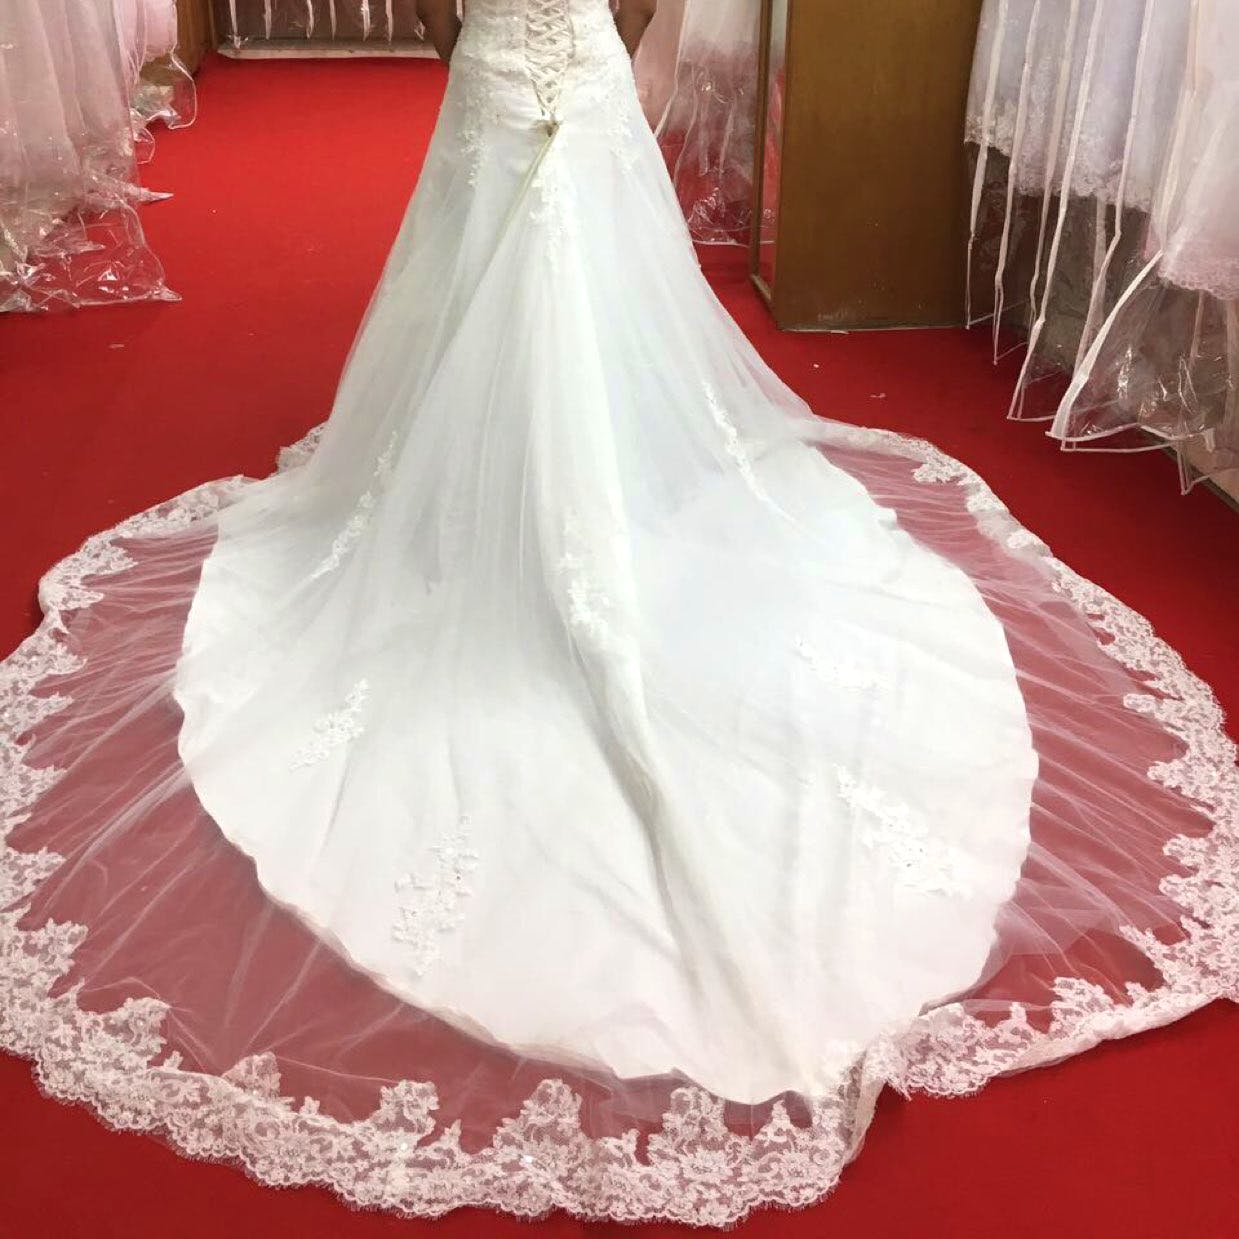 Christian Wedding Dress Ideas, Christian Wedding Gown Photos-megaelearning.vn